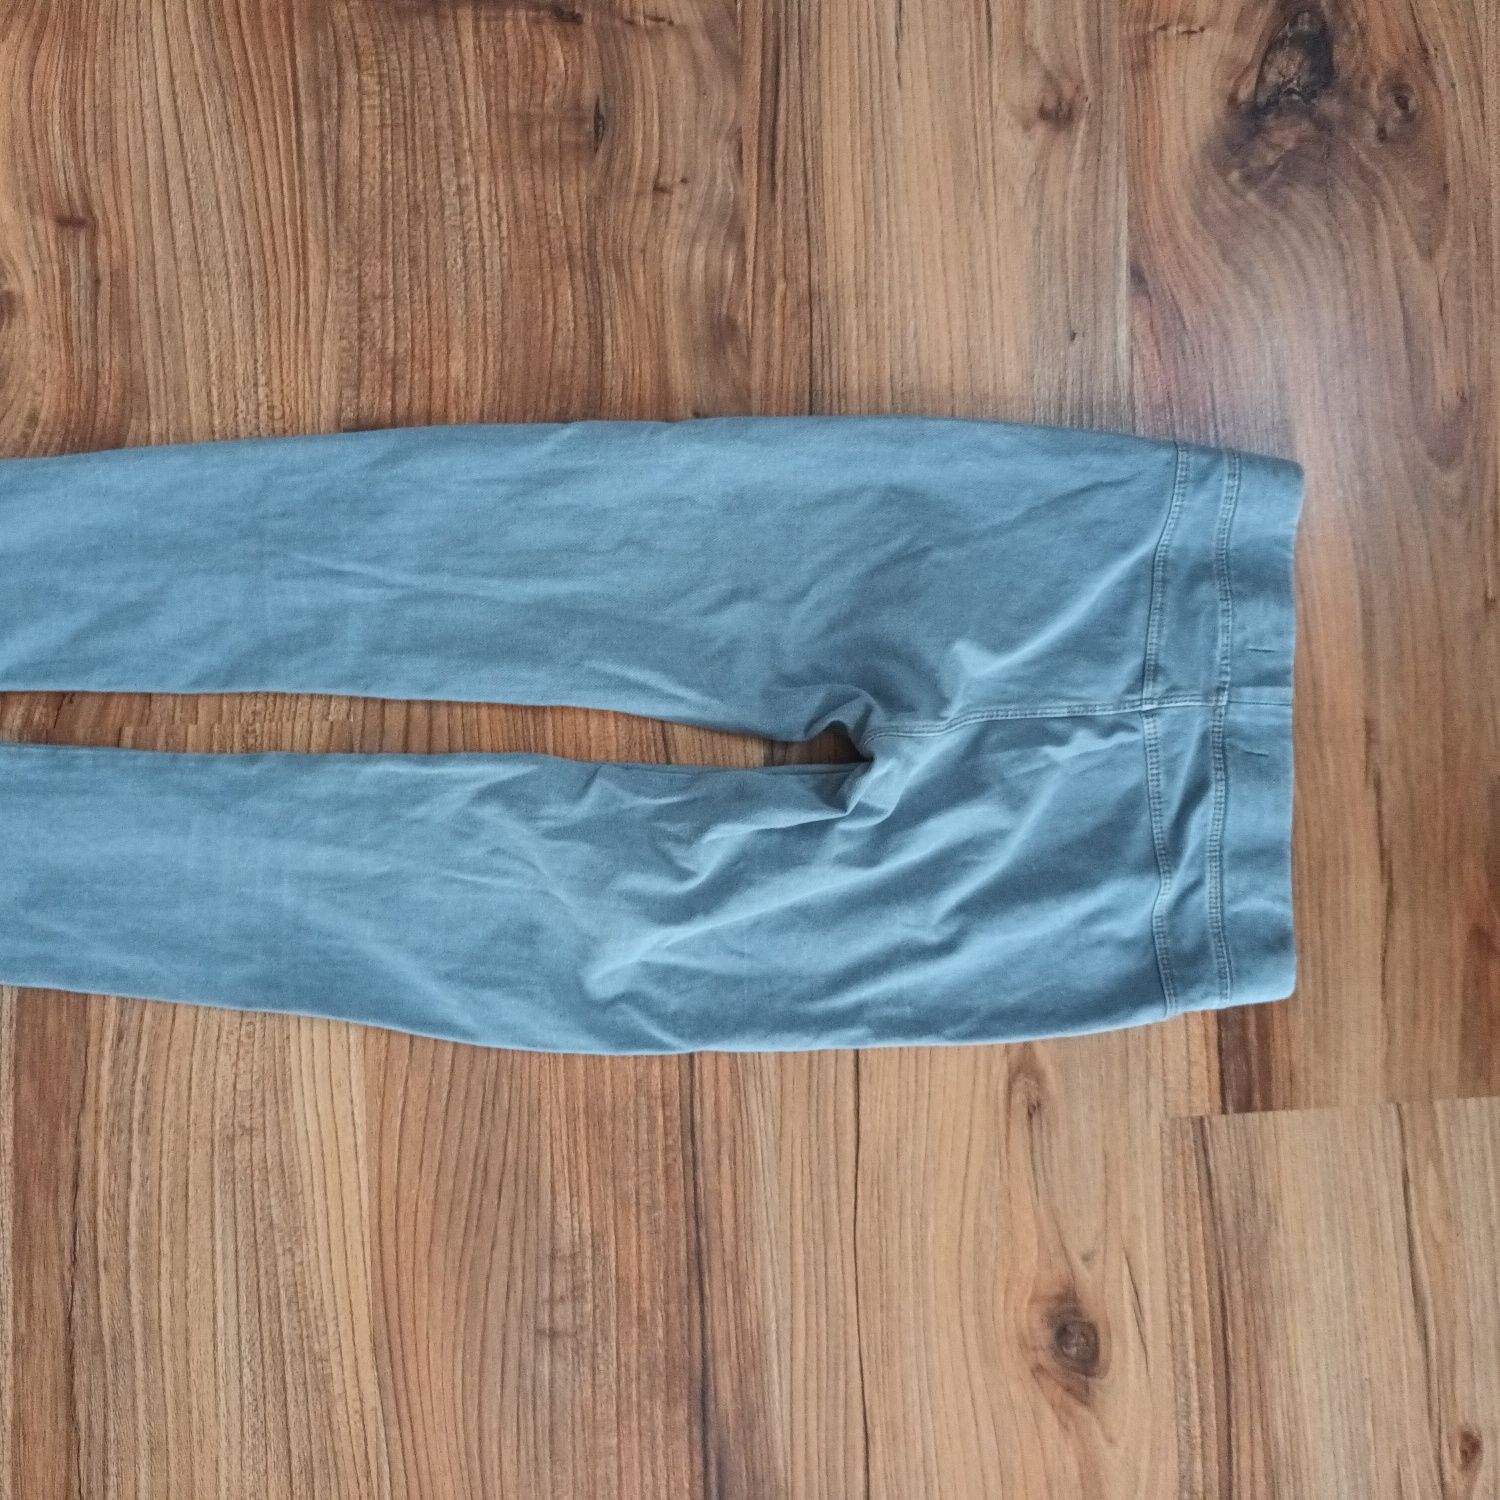 Jegginsy 140 Reserved rurki legginsy szare spodnie elastyczne jeansy